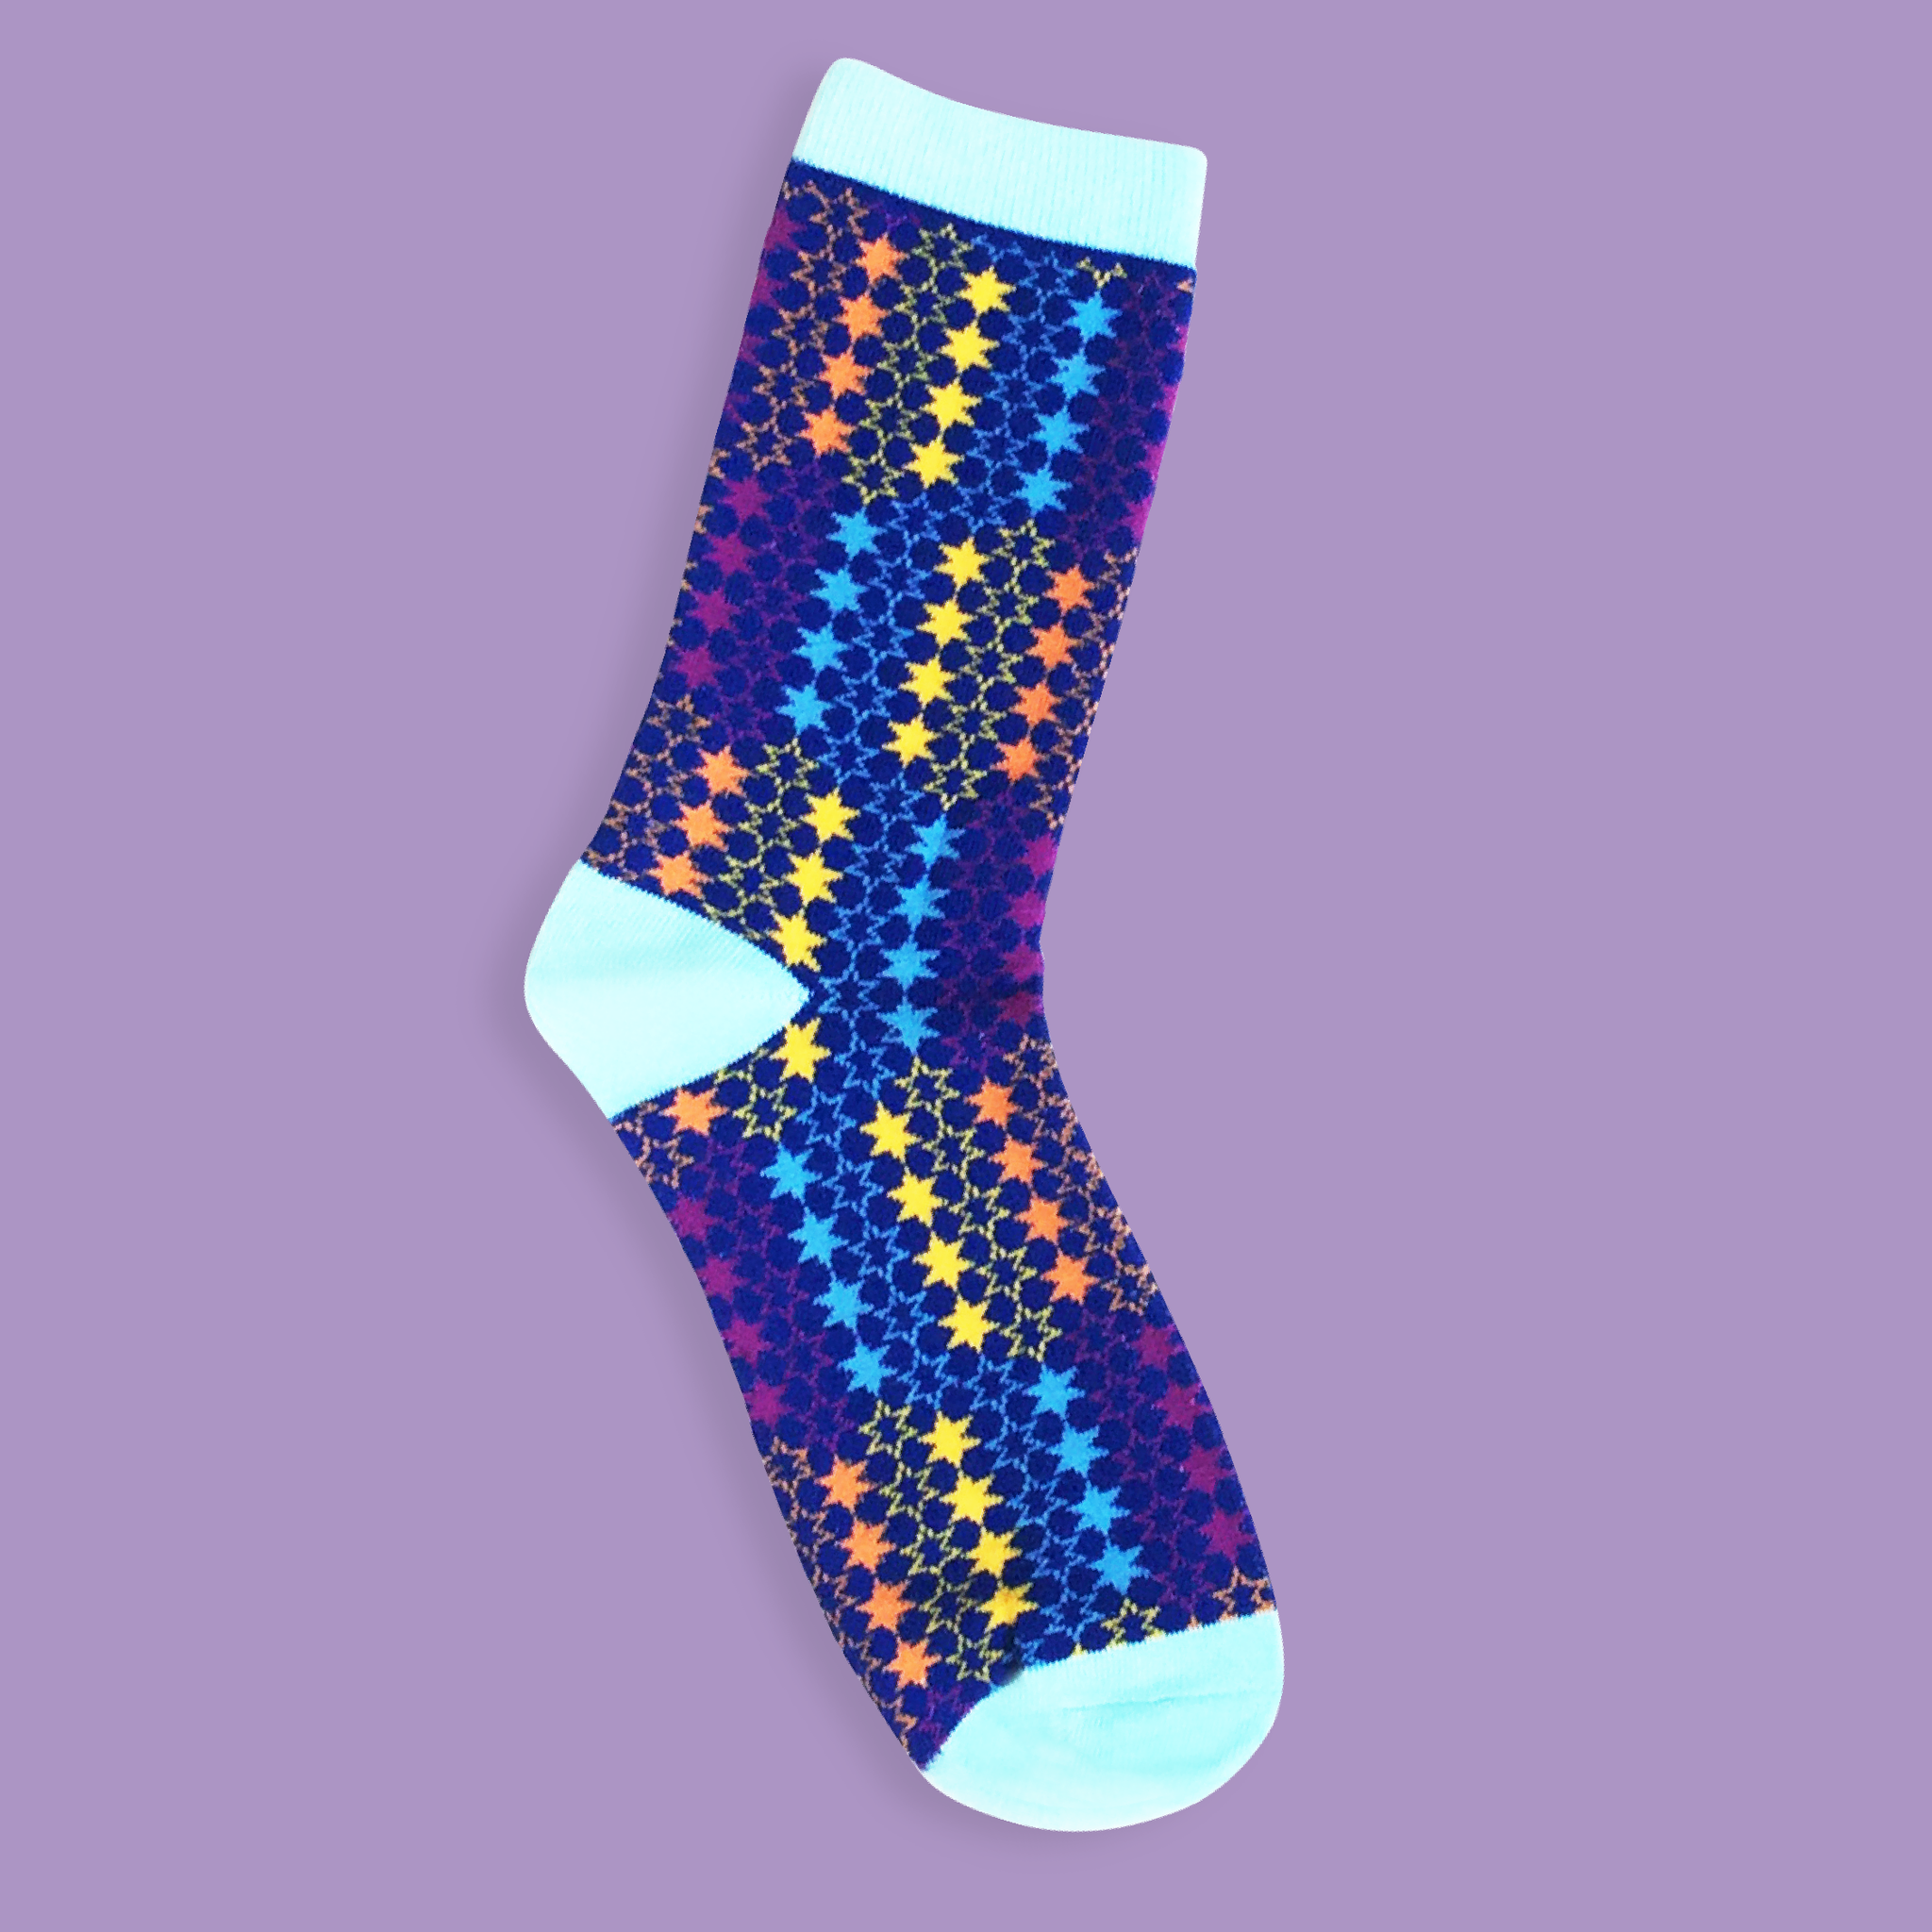 The Single Socks I Sammie Stars